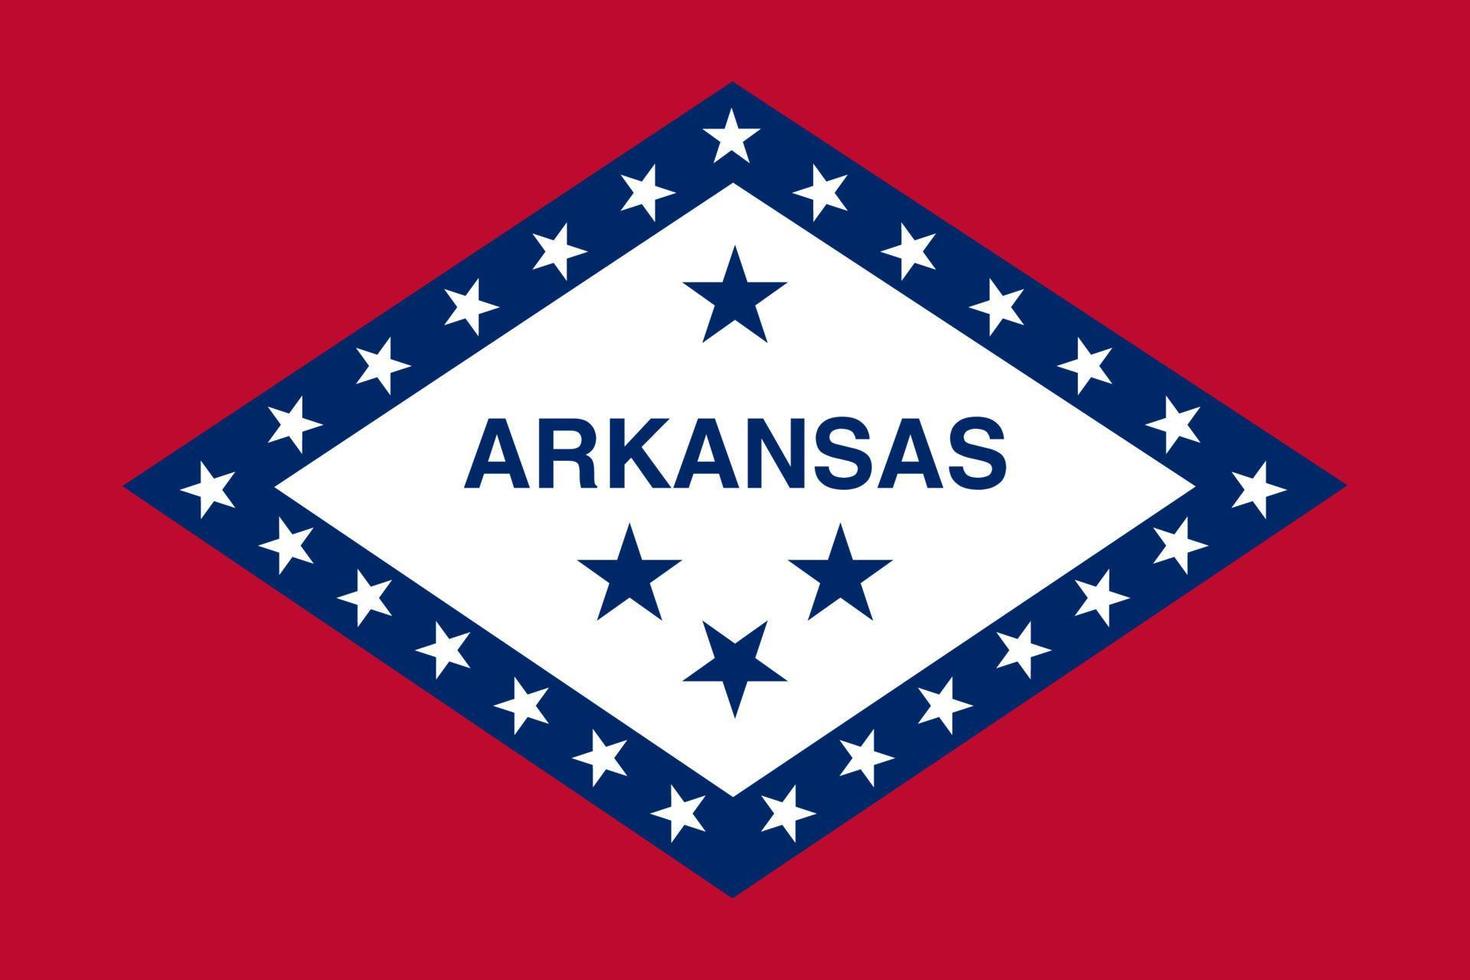 Flagge Arkansas Vektor-Illustration Symbol nationales Land-Symbol. freiheit nation flagge arkansas unabhängigkeit patriotismus feier design regierung international offizieller symbolischer gegenstand kultur vektor